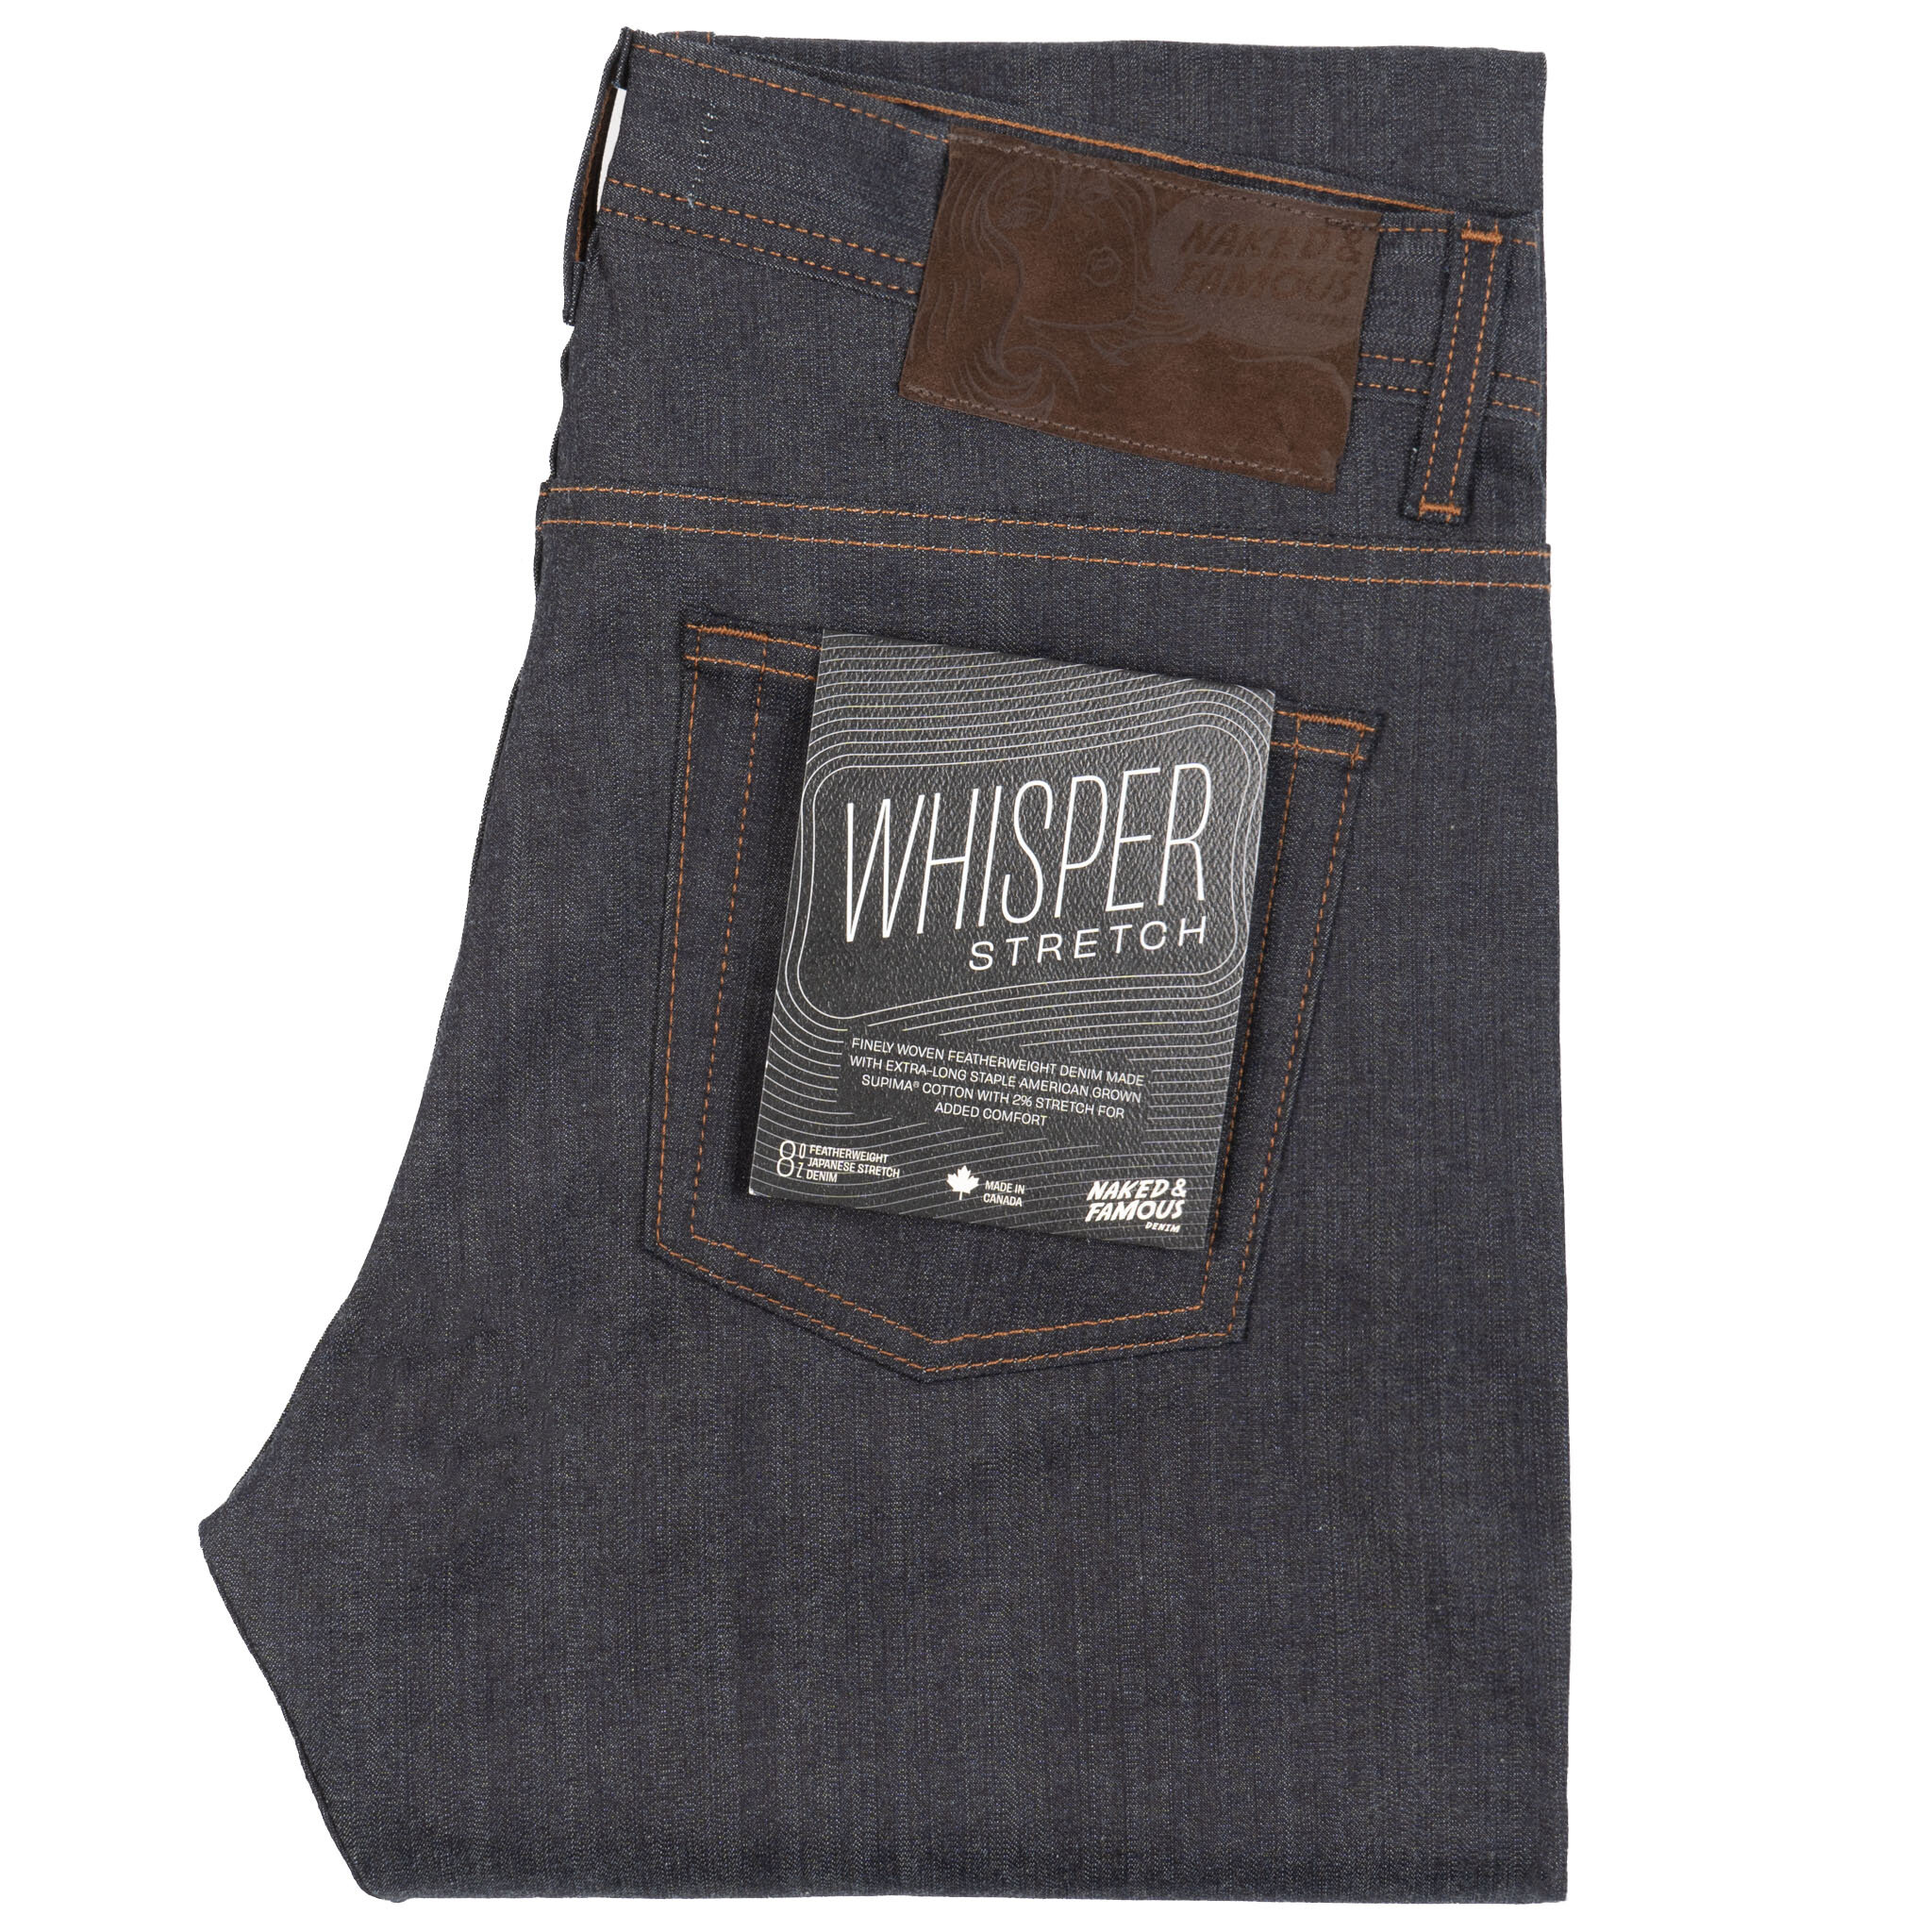  Whisper Stretch Denim  jeans - folded 